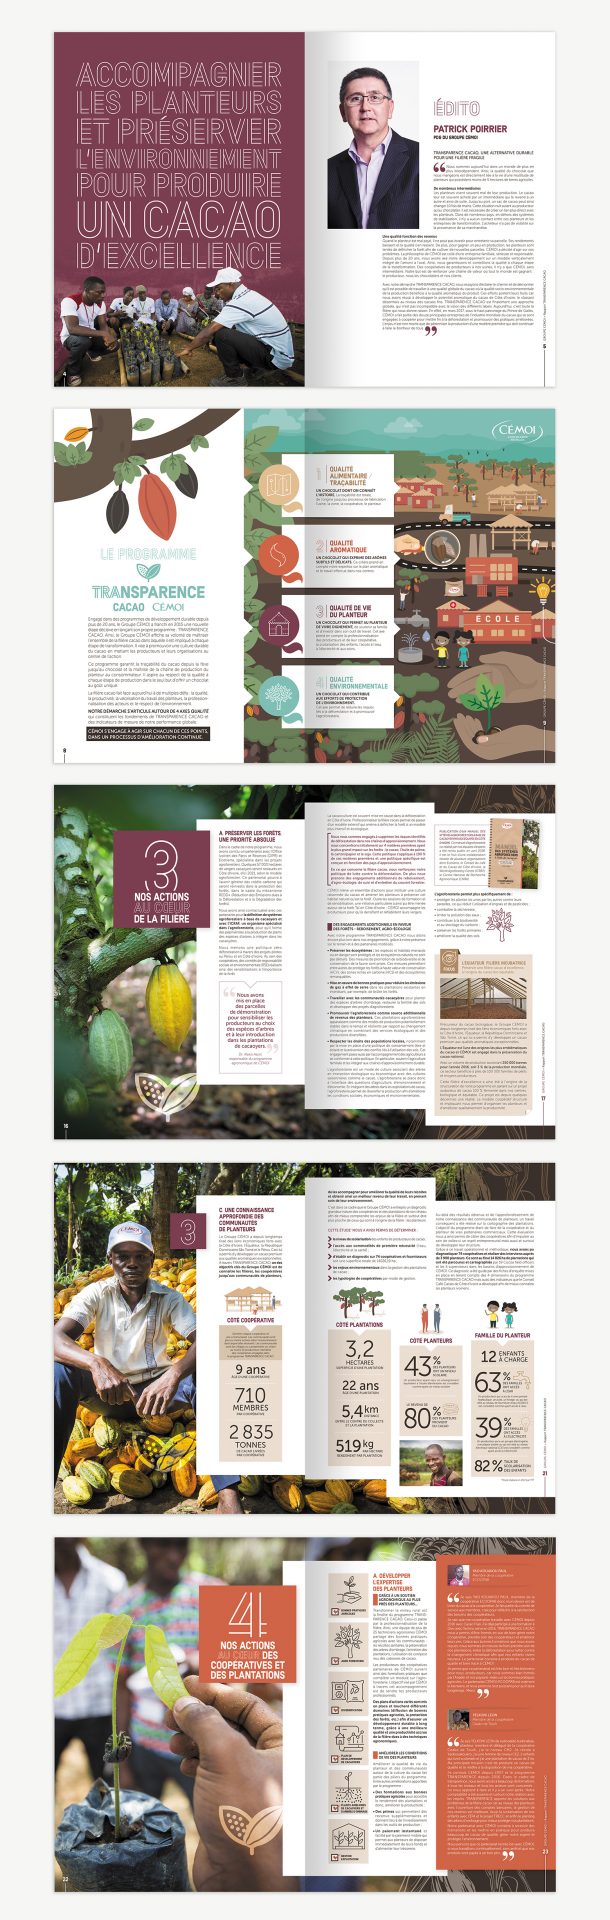 Brochure Transparence Cacao intérieur